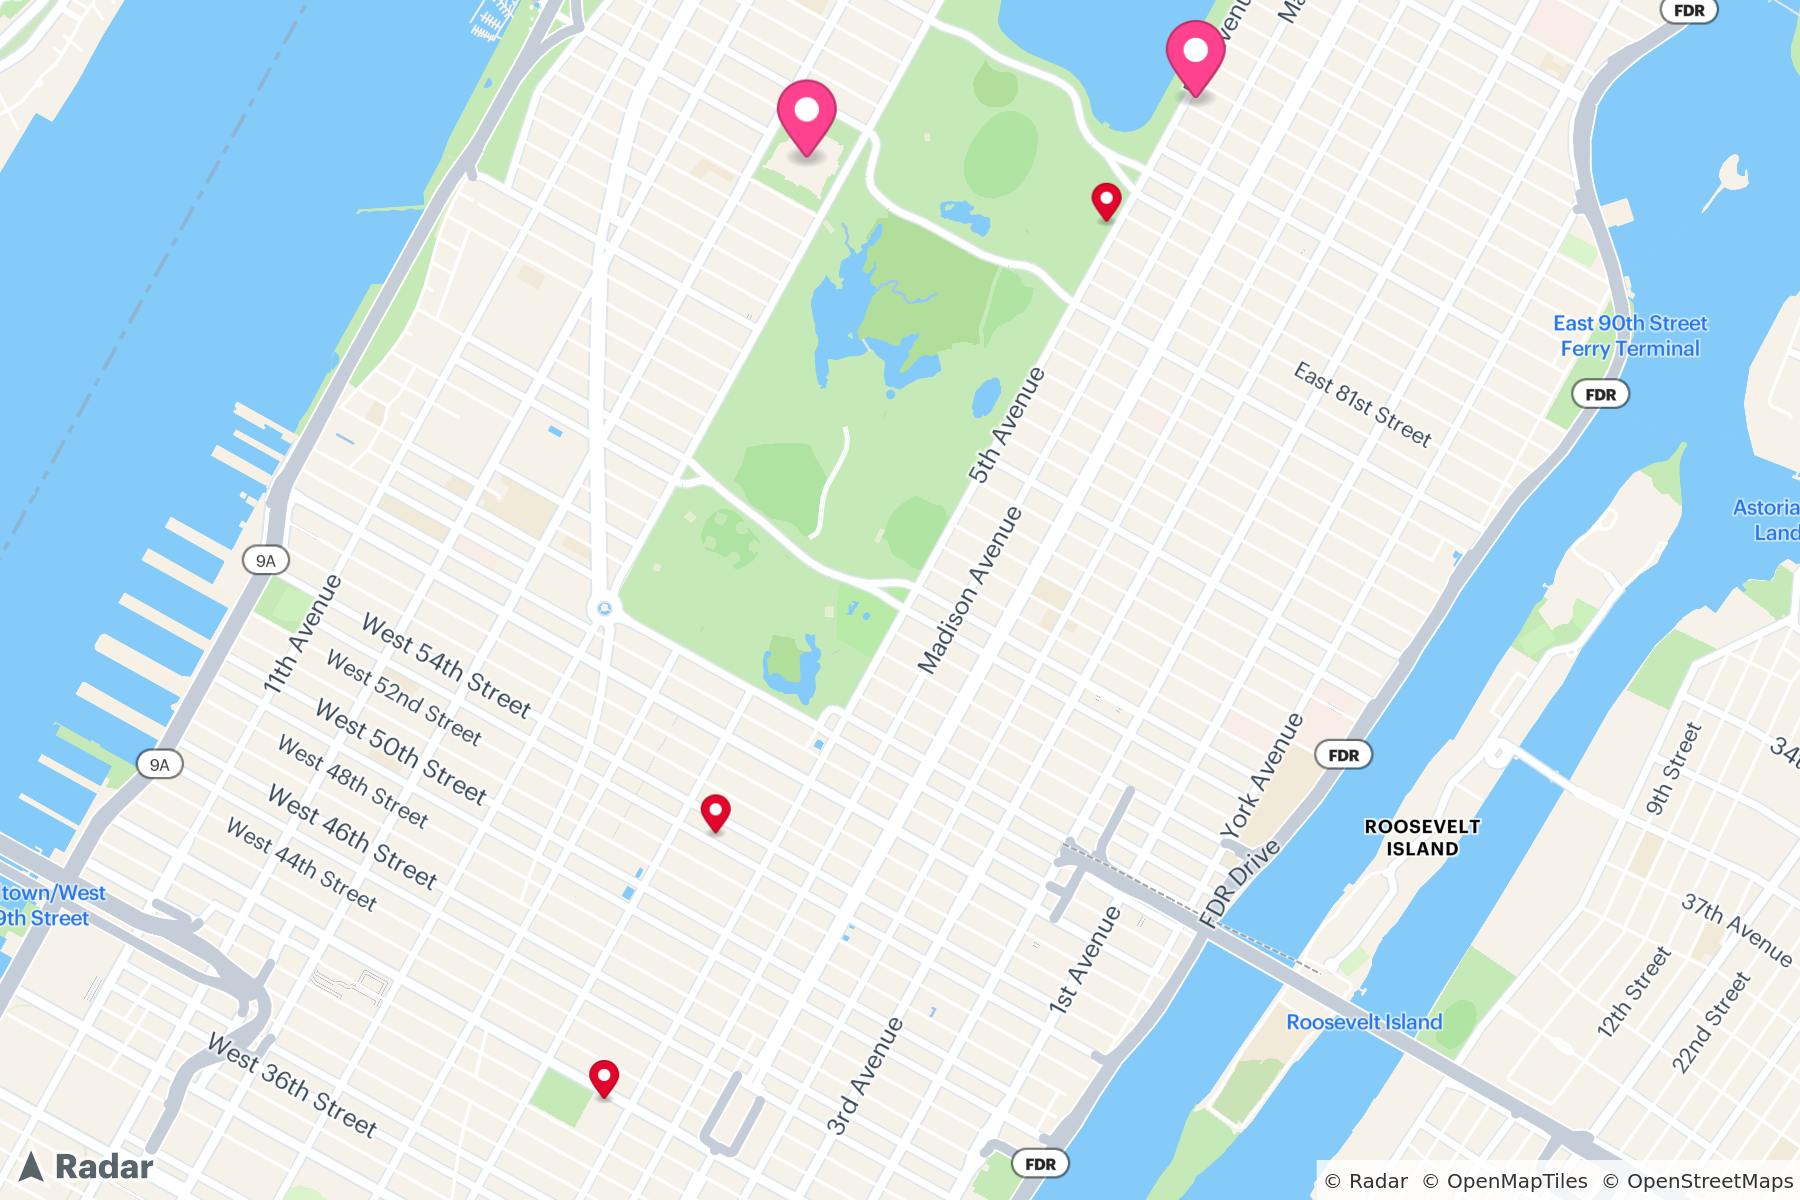 Radar Static Map over New York City museums